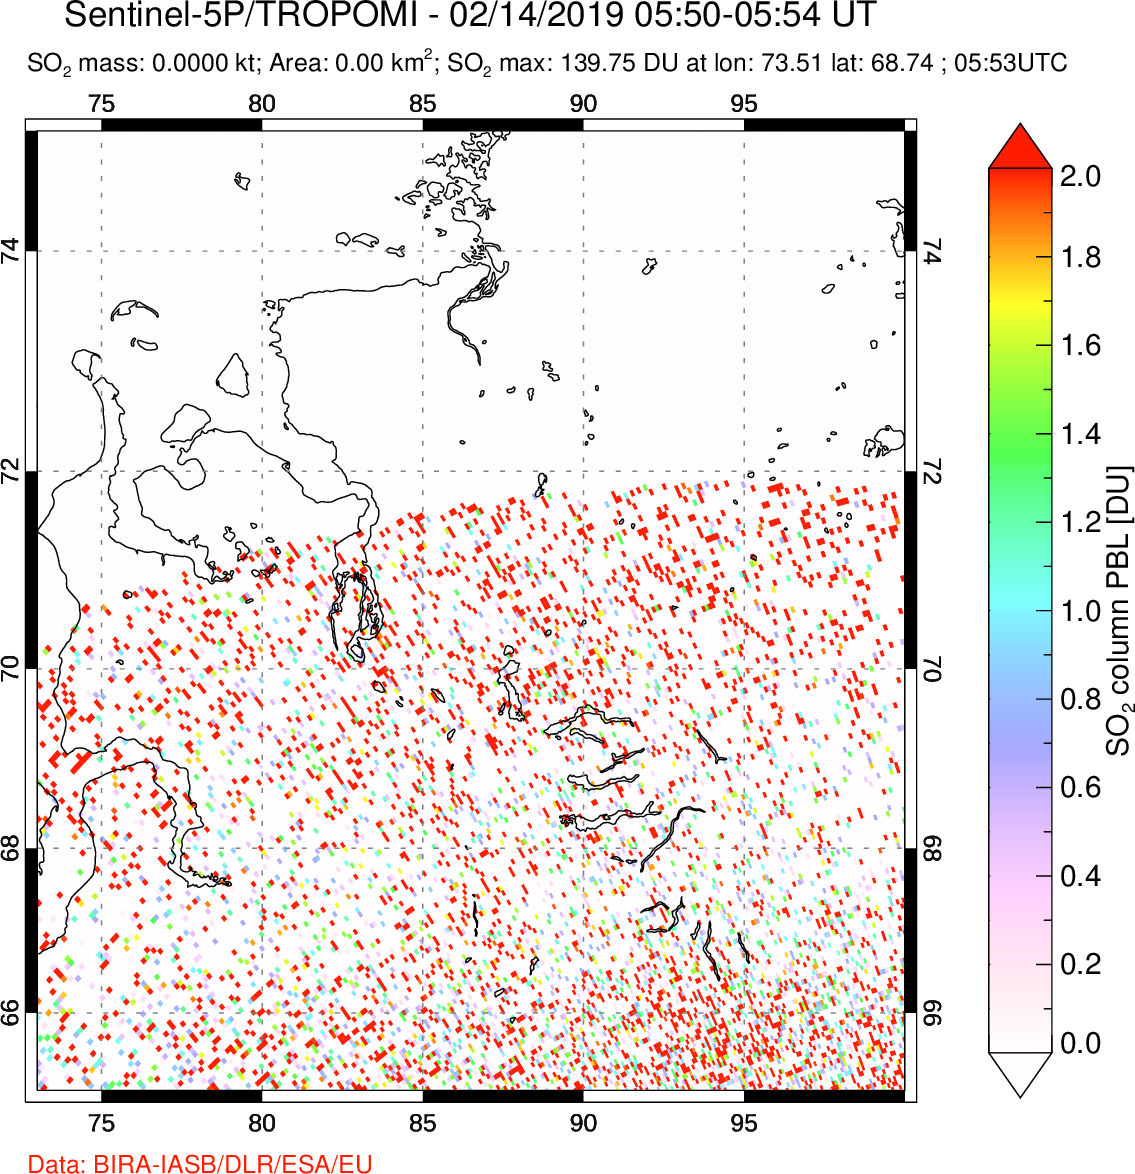 A sulfur dioxide image over Norilsk, Russian Federation on Feb 14, 2019.